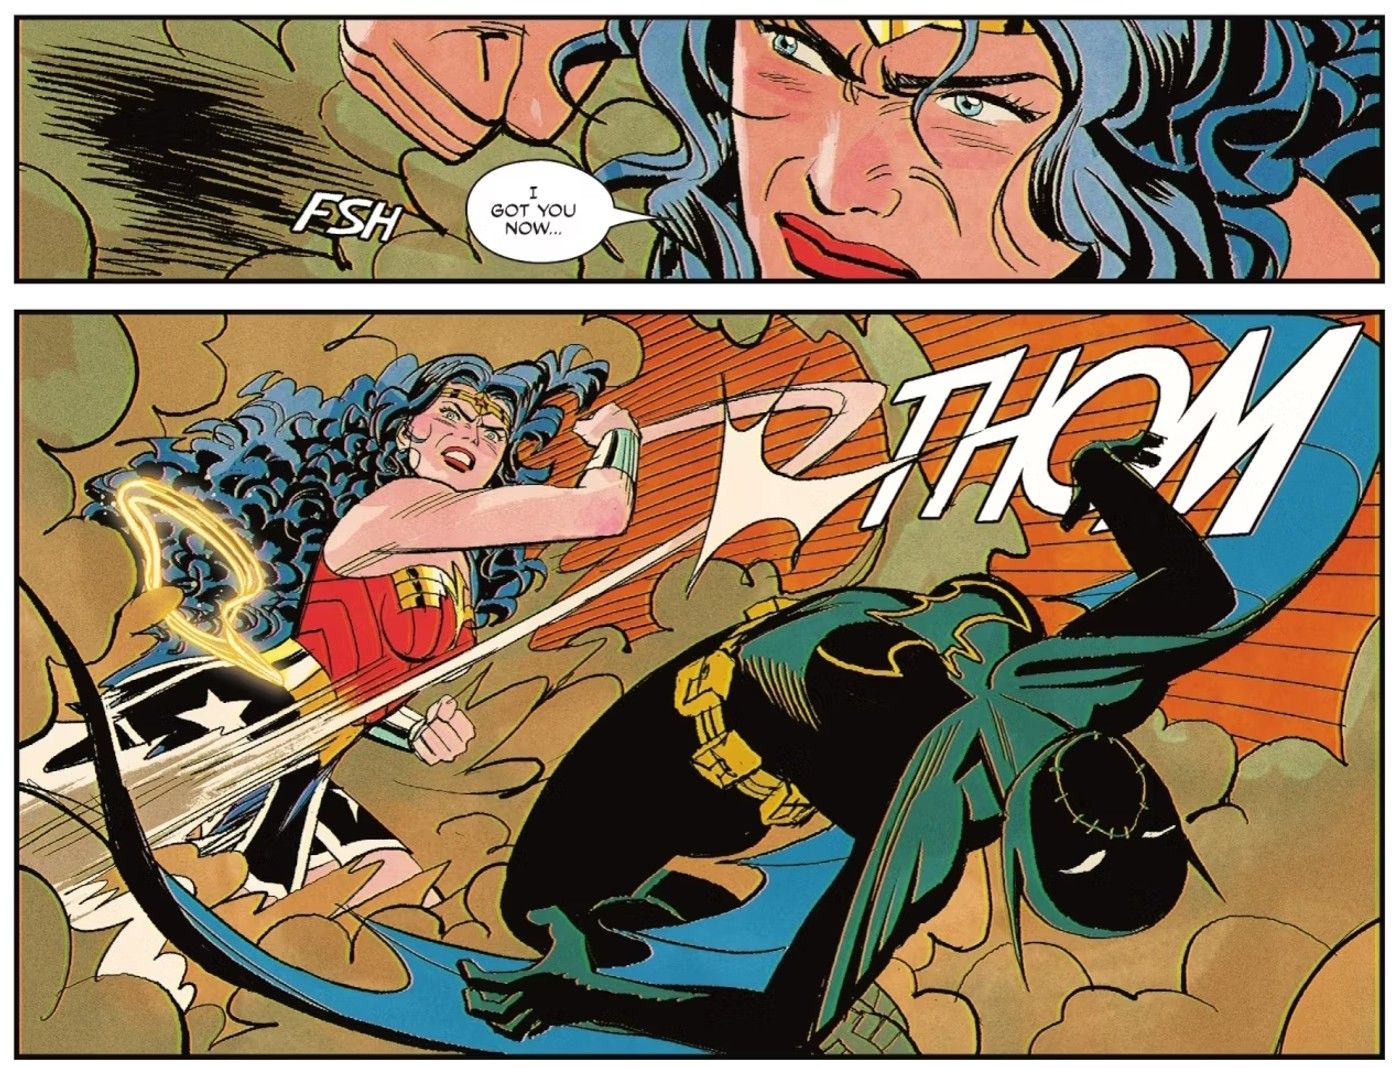 Comic book panels: Wonder Woman punches Batgirl.